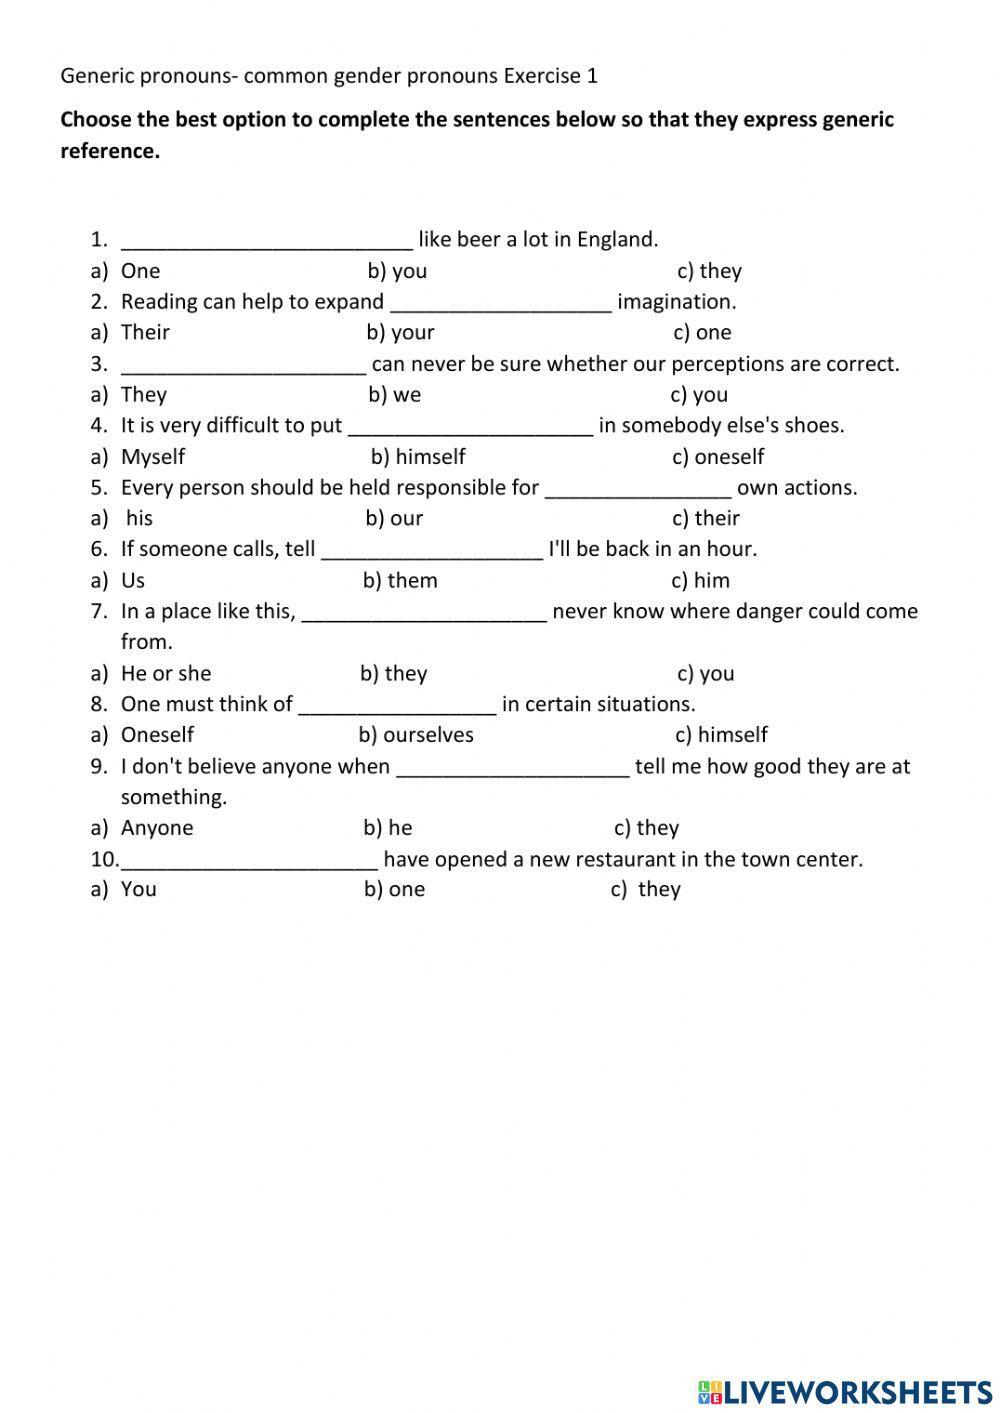 Generic pronouns- common gender pronouns . Ex 1 worksheet | Live Worksheets